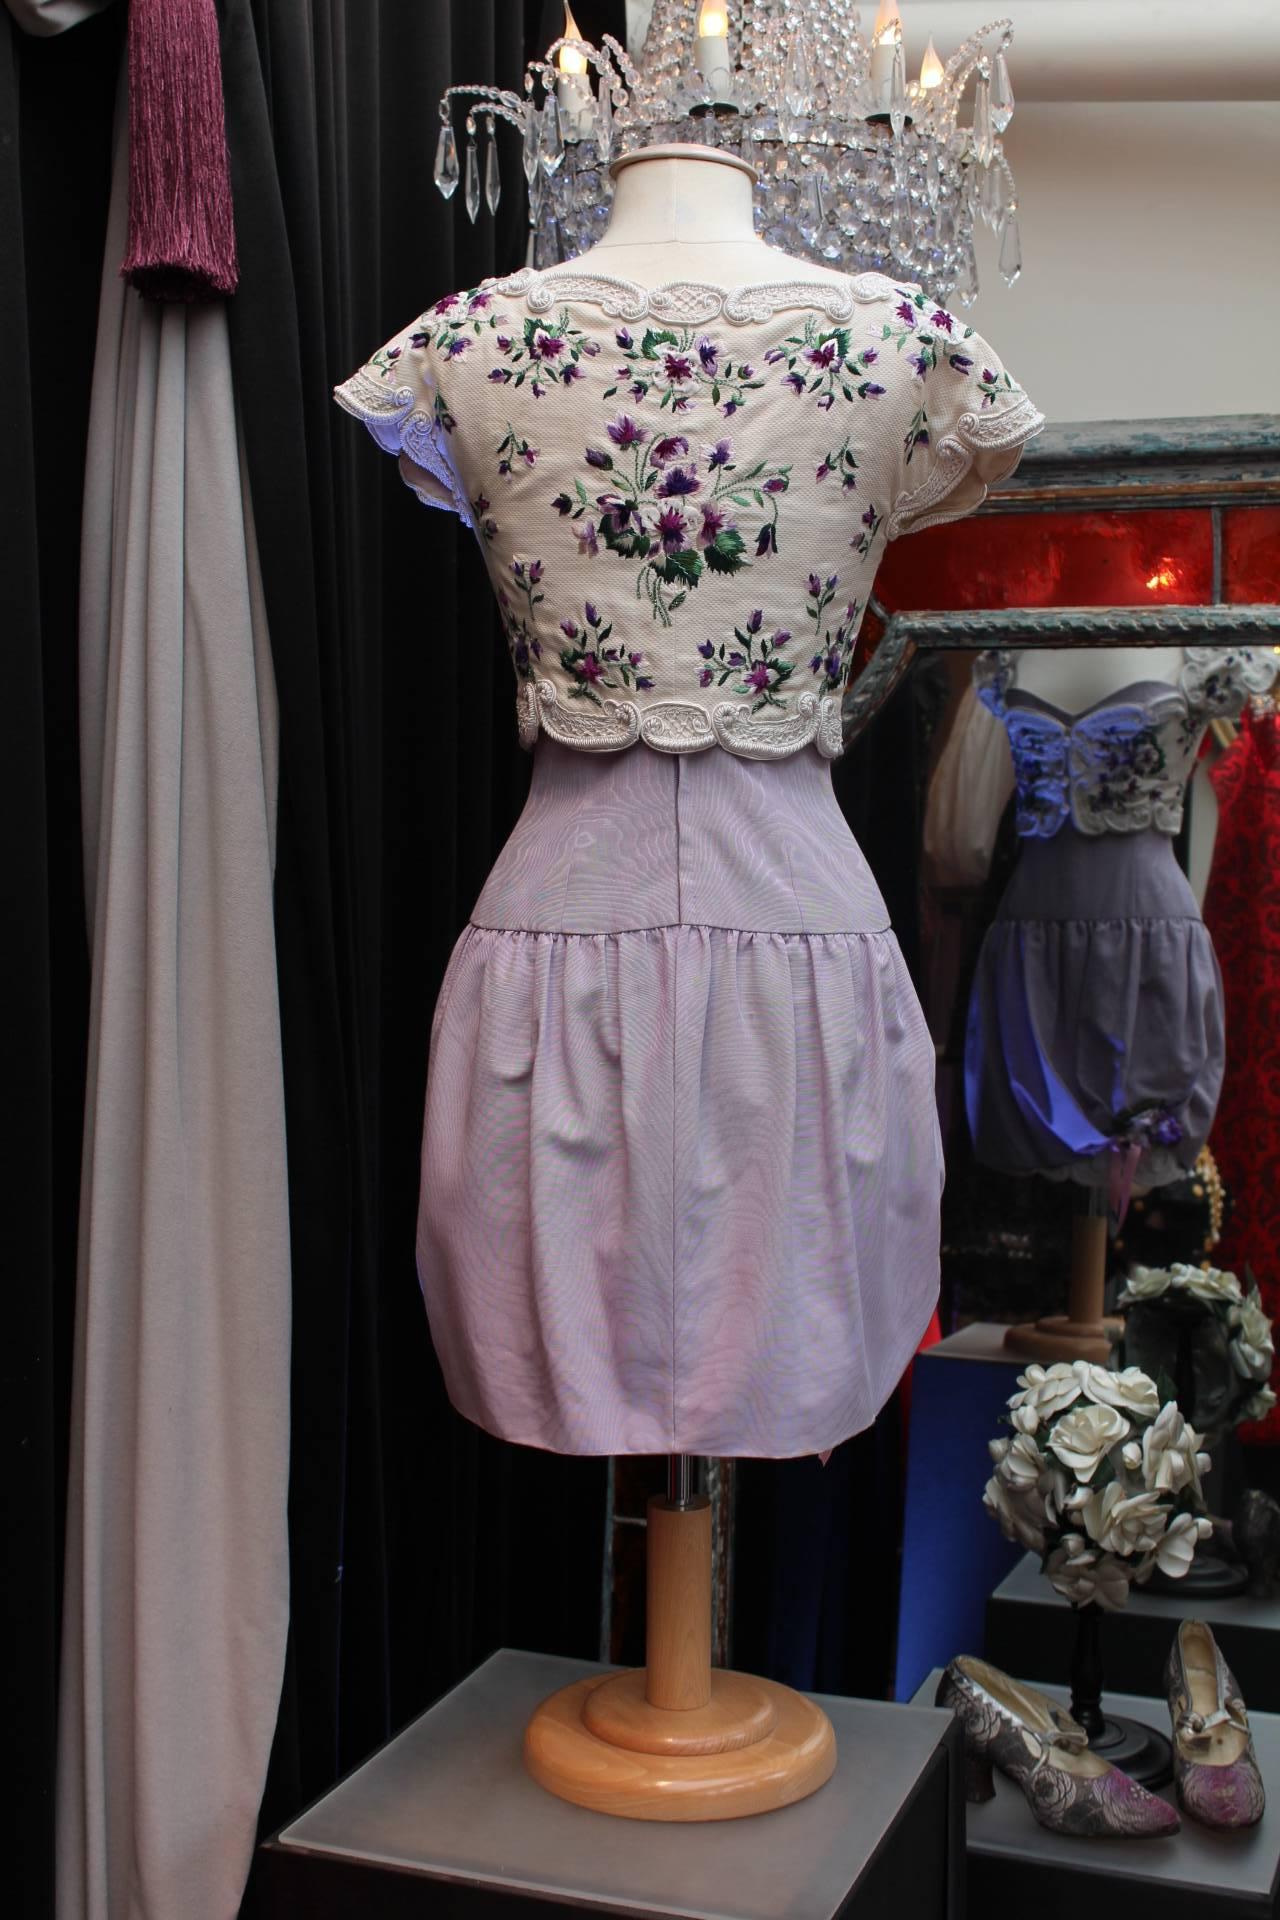 Purple Jean-Louis Scherrer Runway dress and bolero set in white and mauve colors For Sale